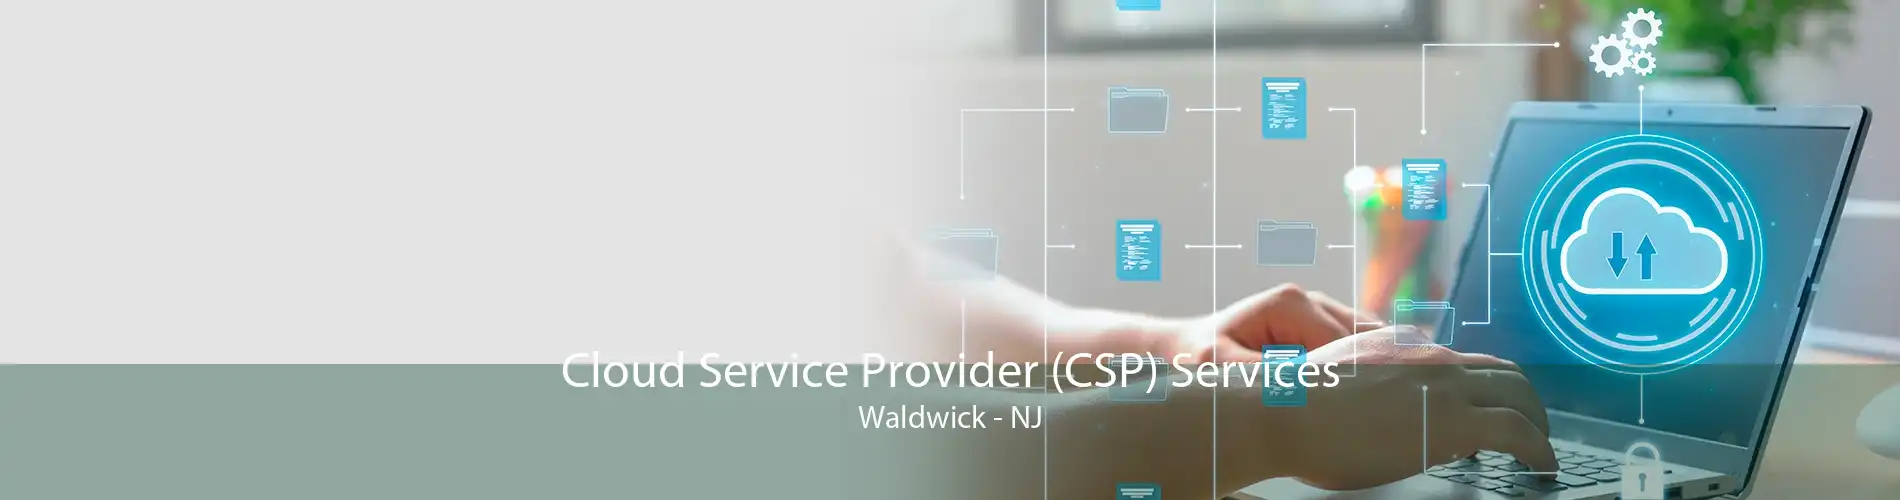 Cloud Service Provider (CSP) Services Waldwick - NJ